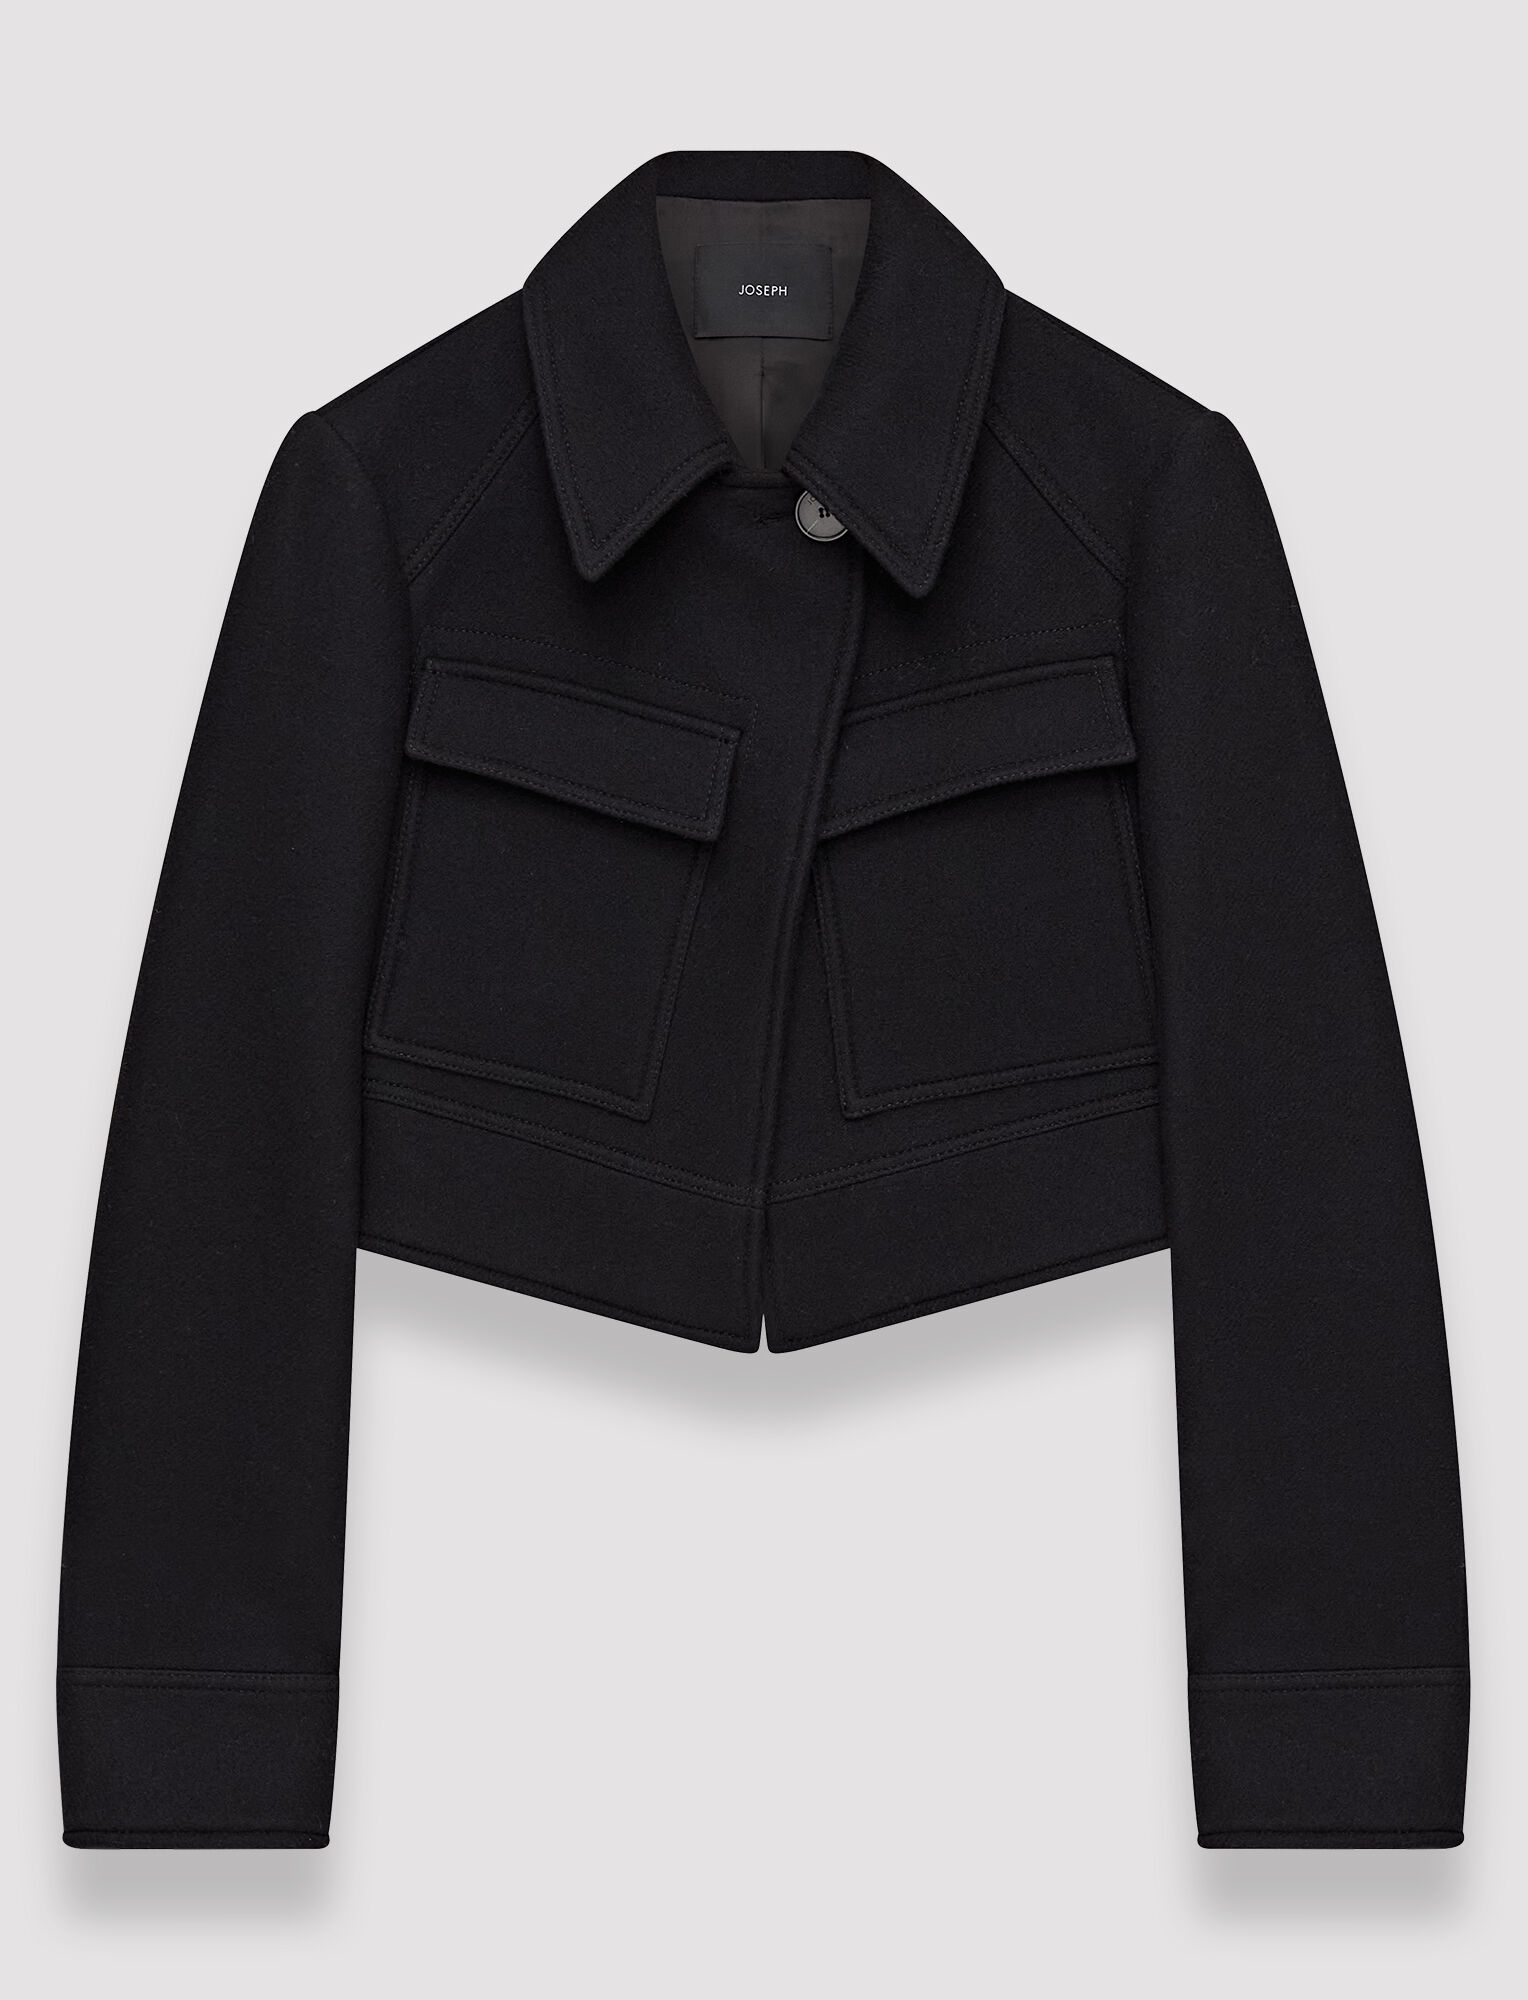 Joseph, Wool Cranbrook Jacket, in Black